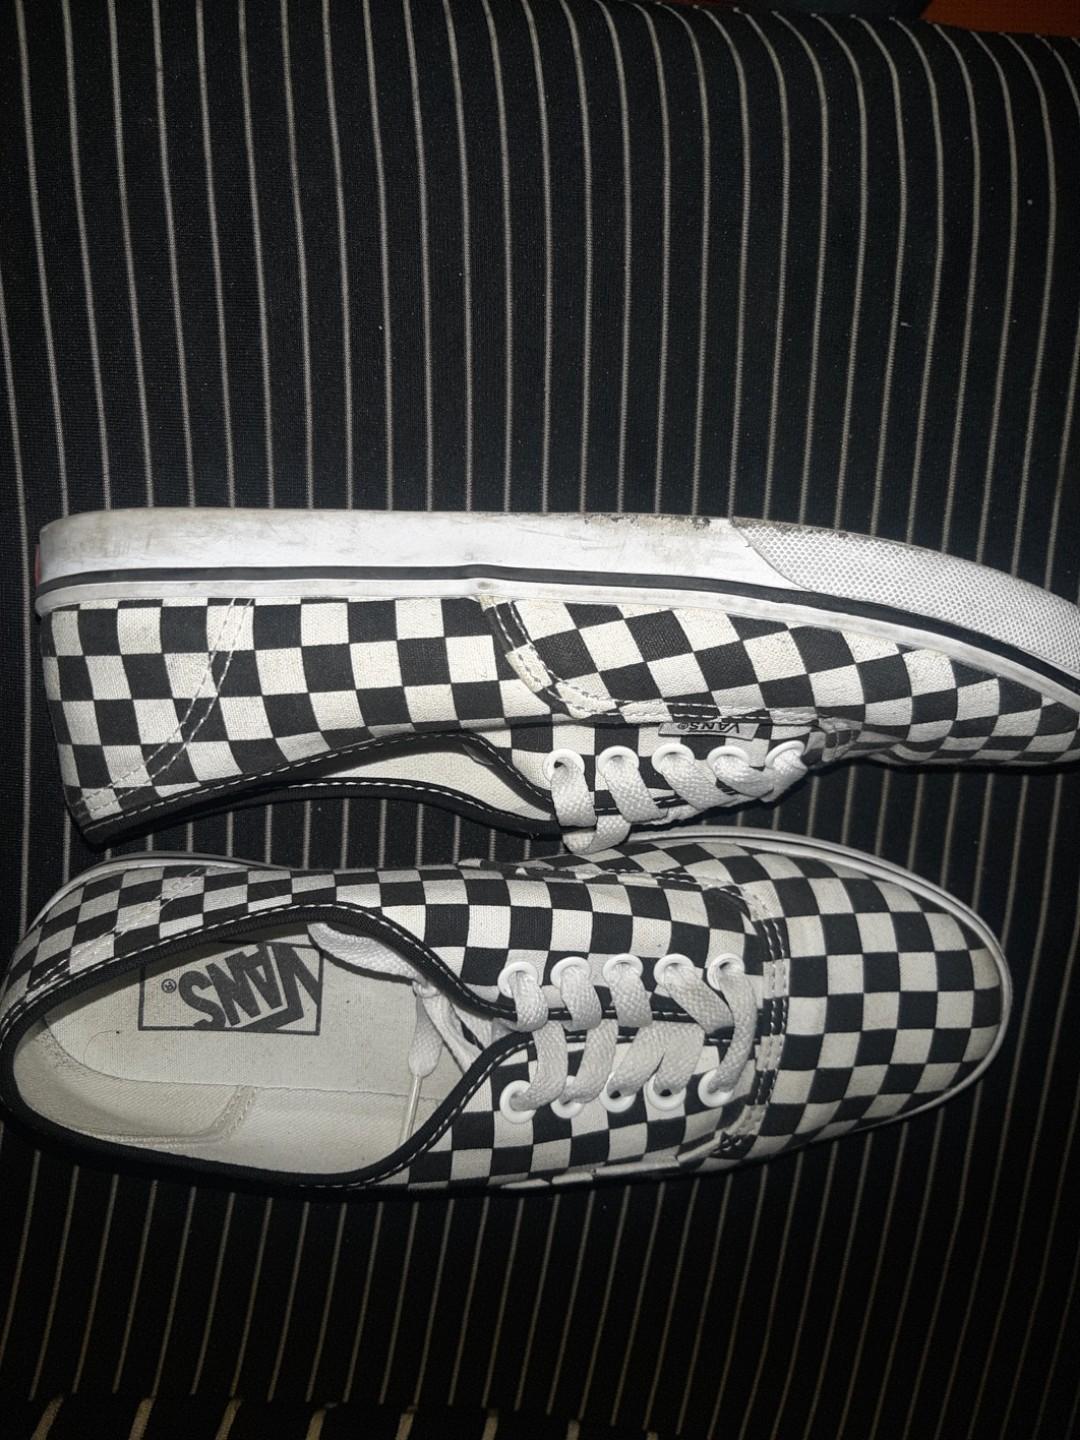 vans authentic golden coast & black checkered skate shoes